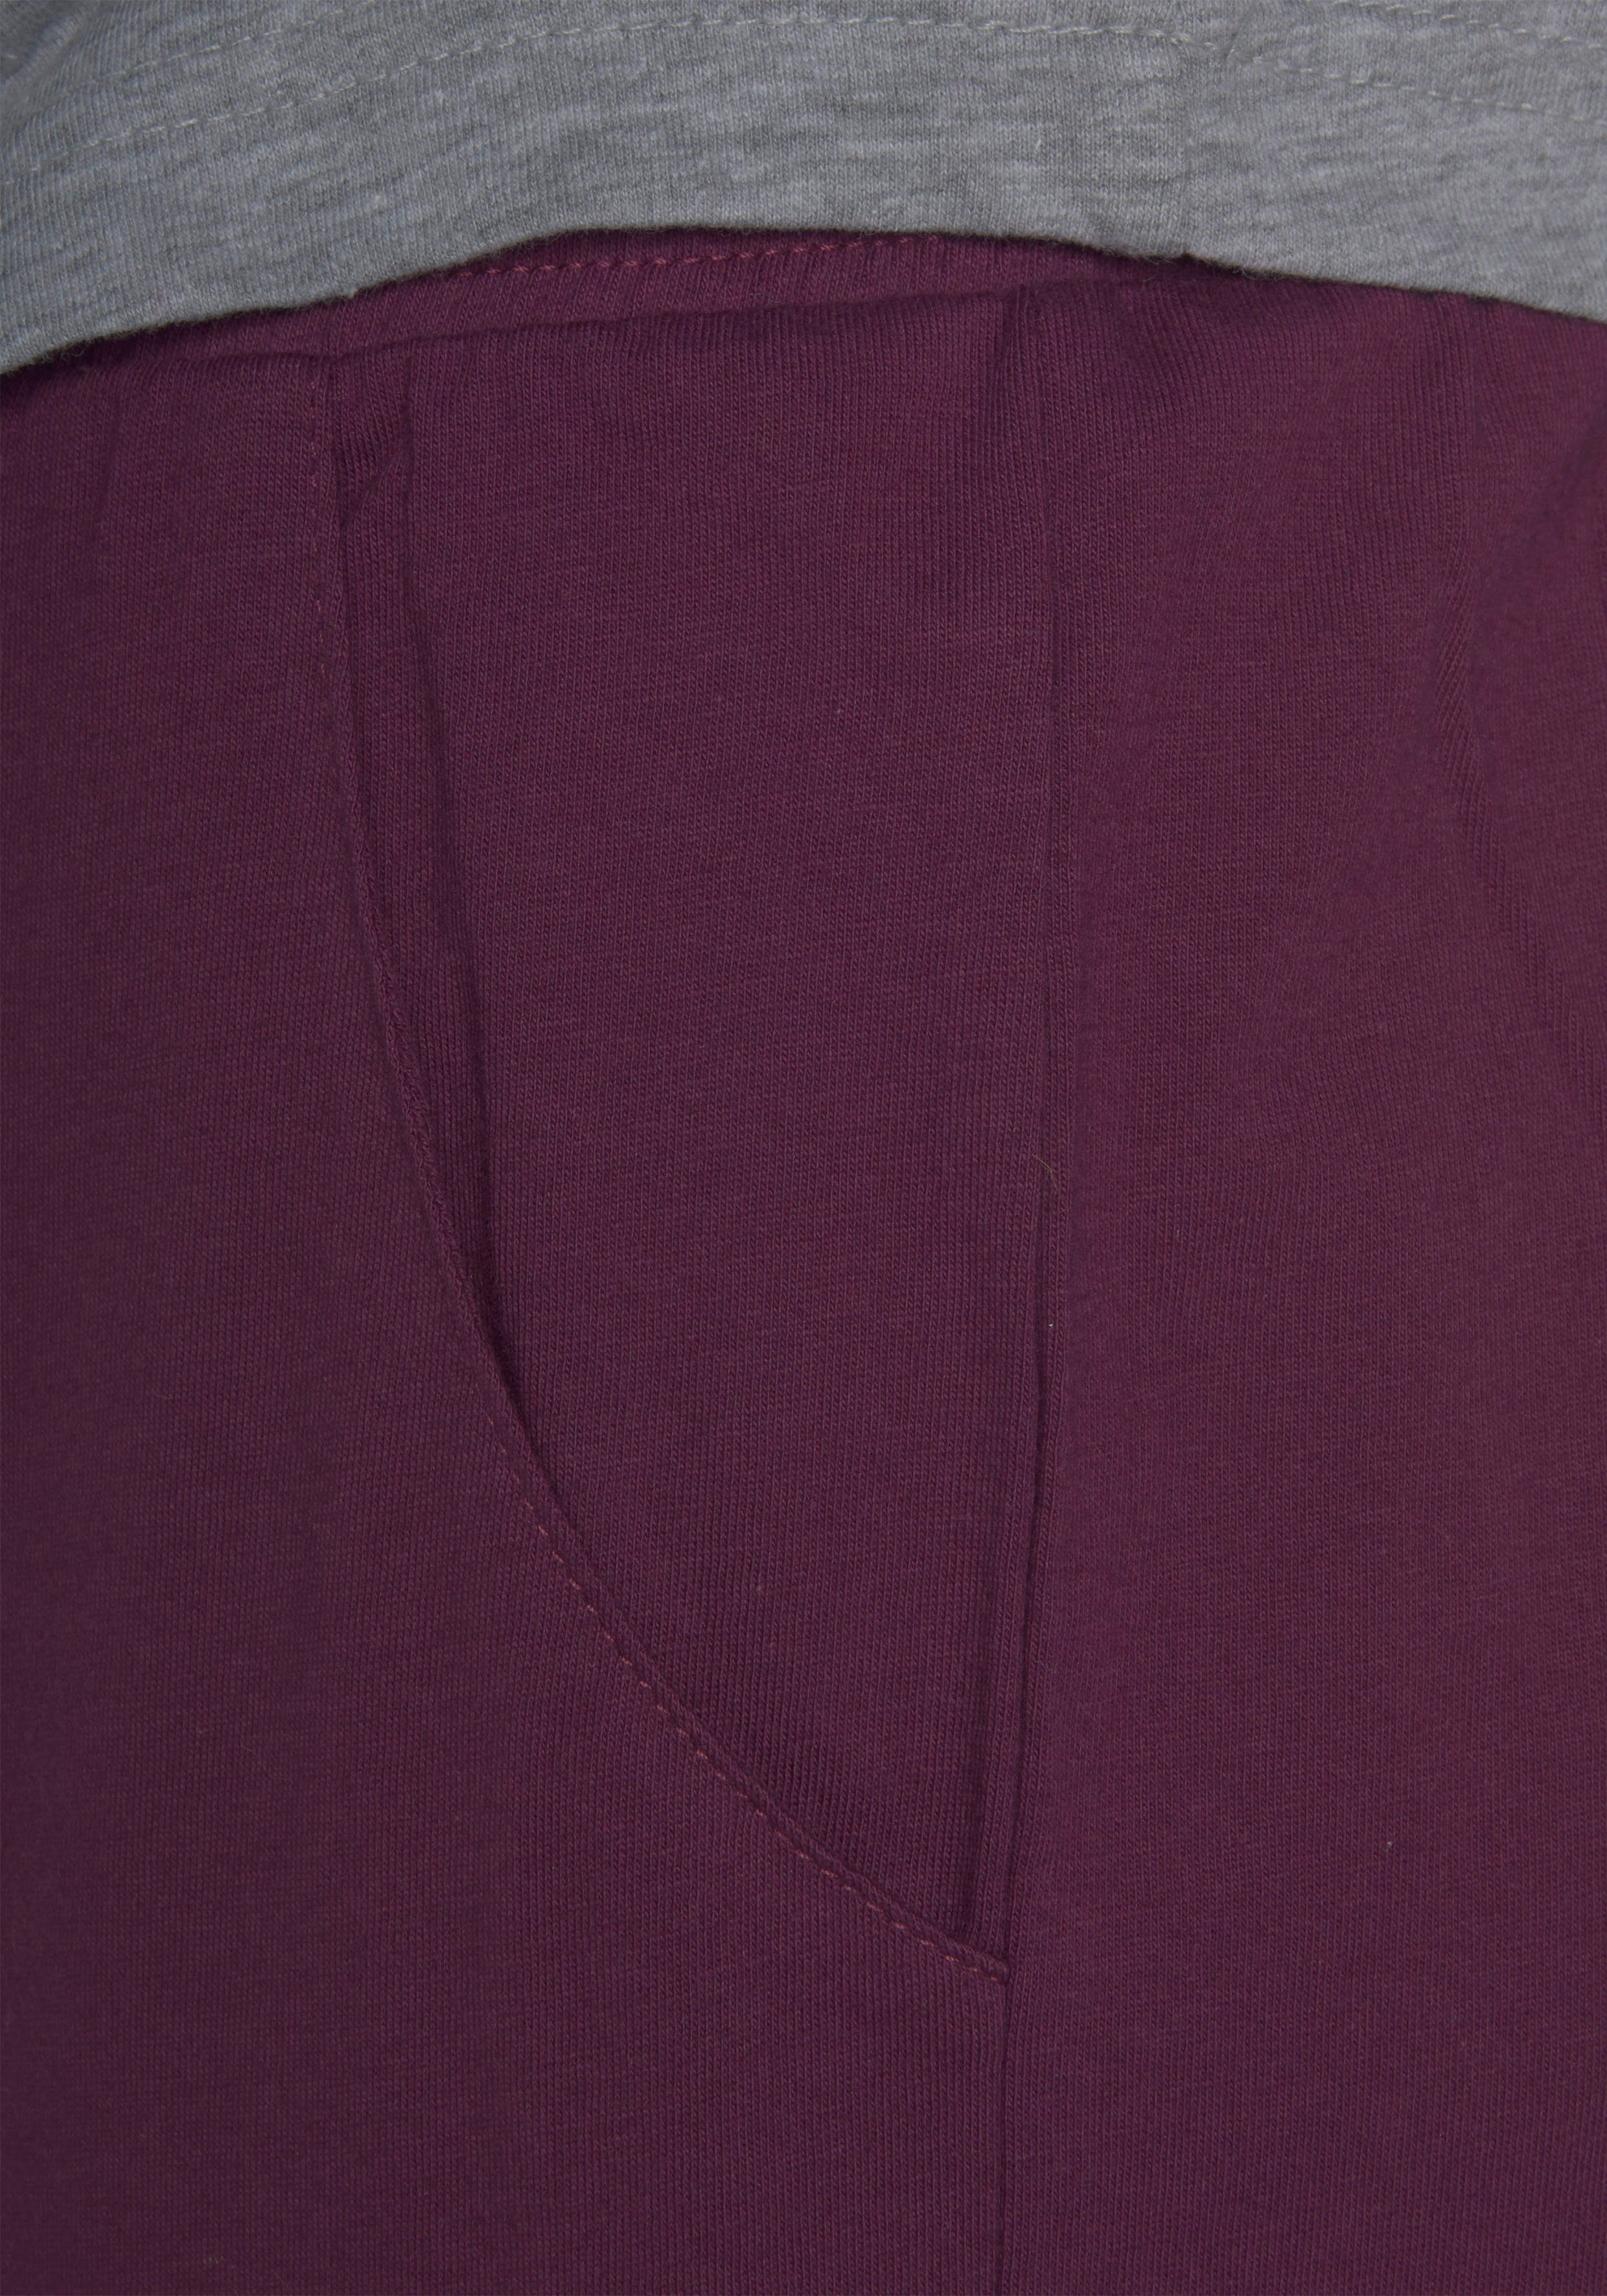 KangaROOS Pyjama bordeaux-grau-meliert kontrastfarbenen tlg., Raglanärmeln Stück) (2 1 mit